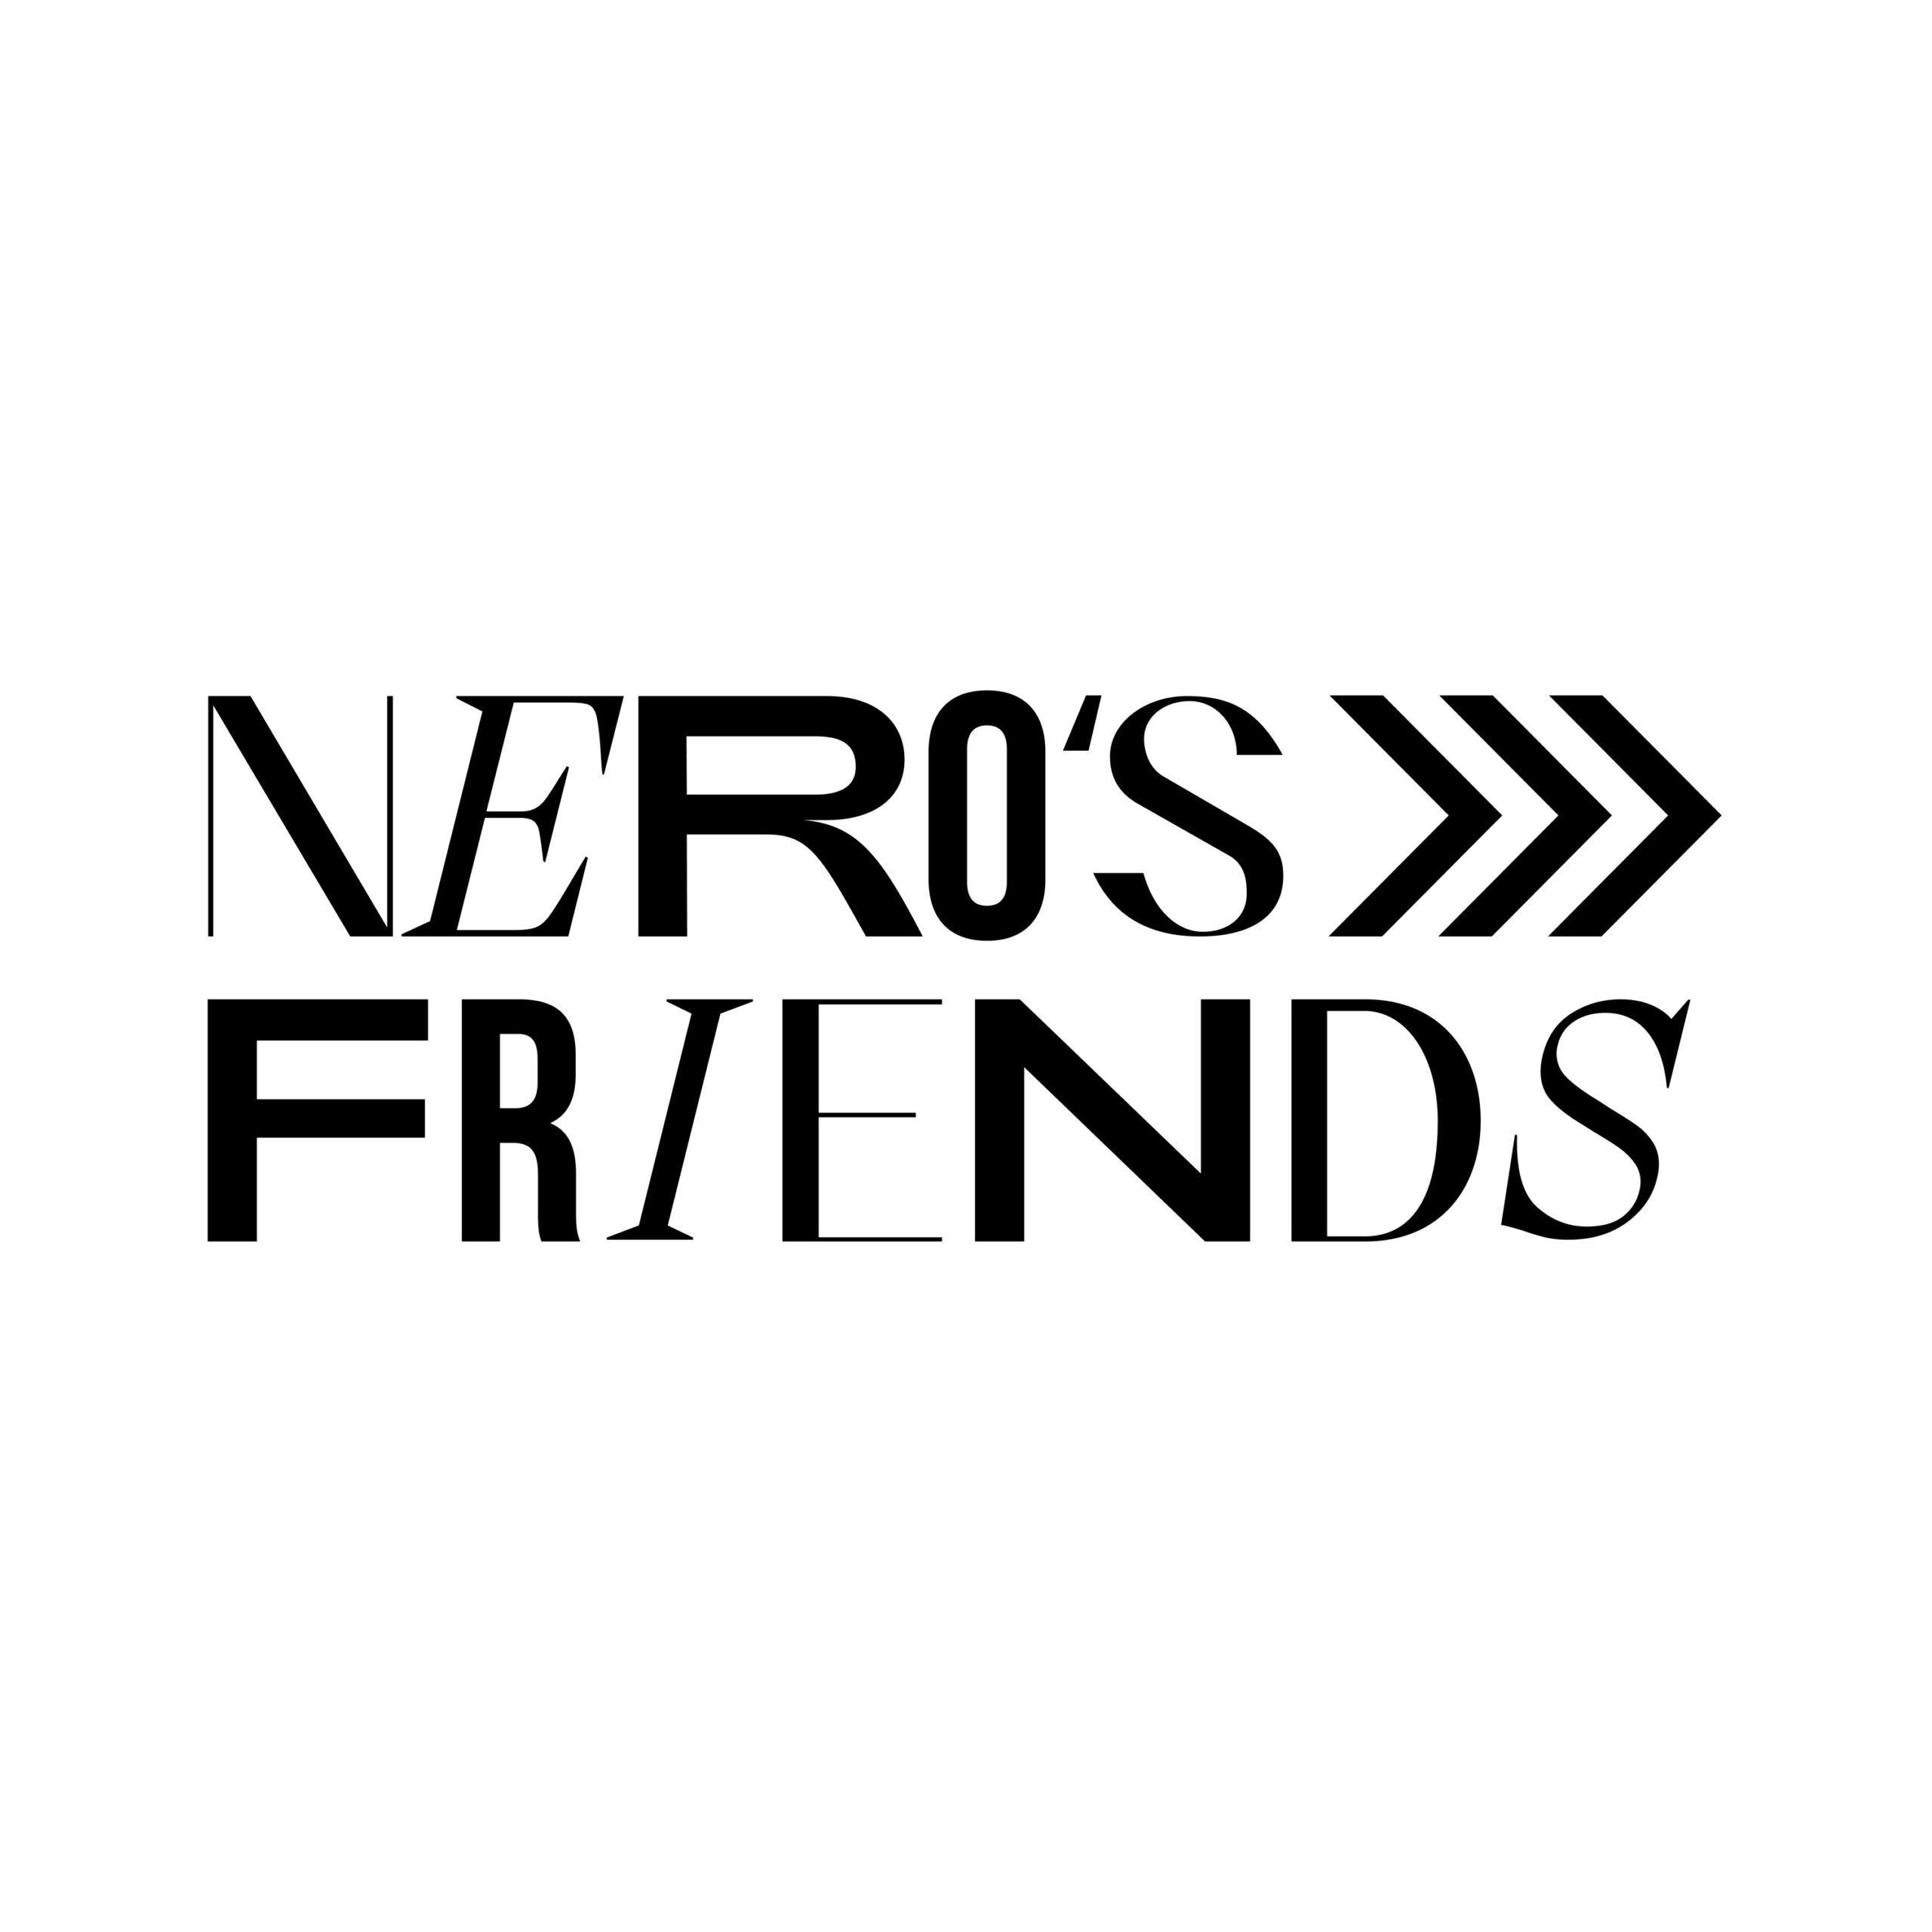 Nero's Friends | Musik, die unters Fell geht.